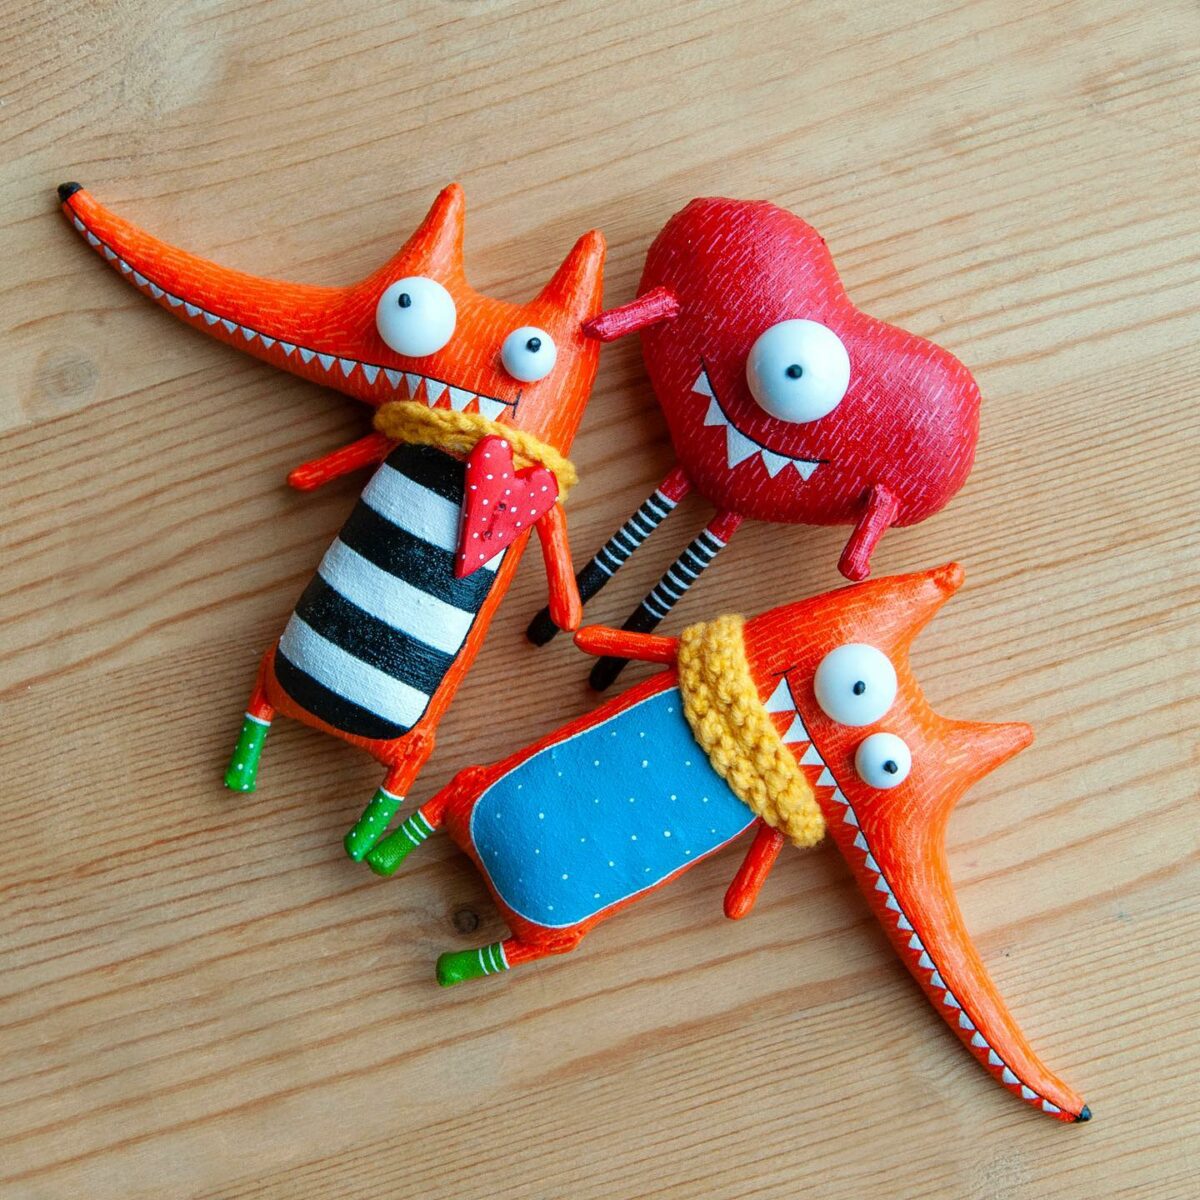 Colorful Handmade Toys Of Quirky Creatures By Lidiya Marinchuk (20)